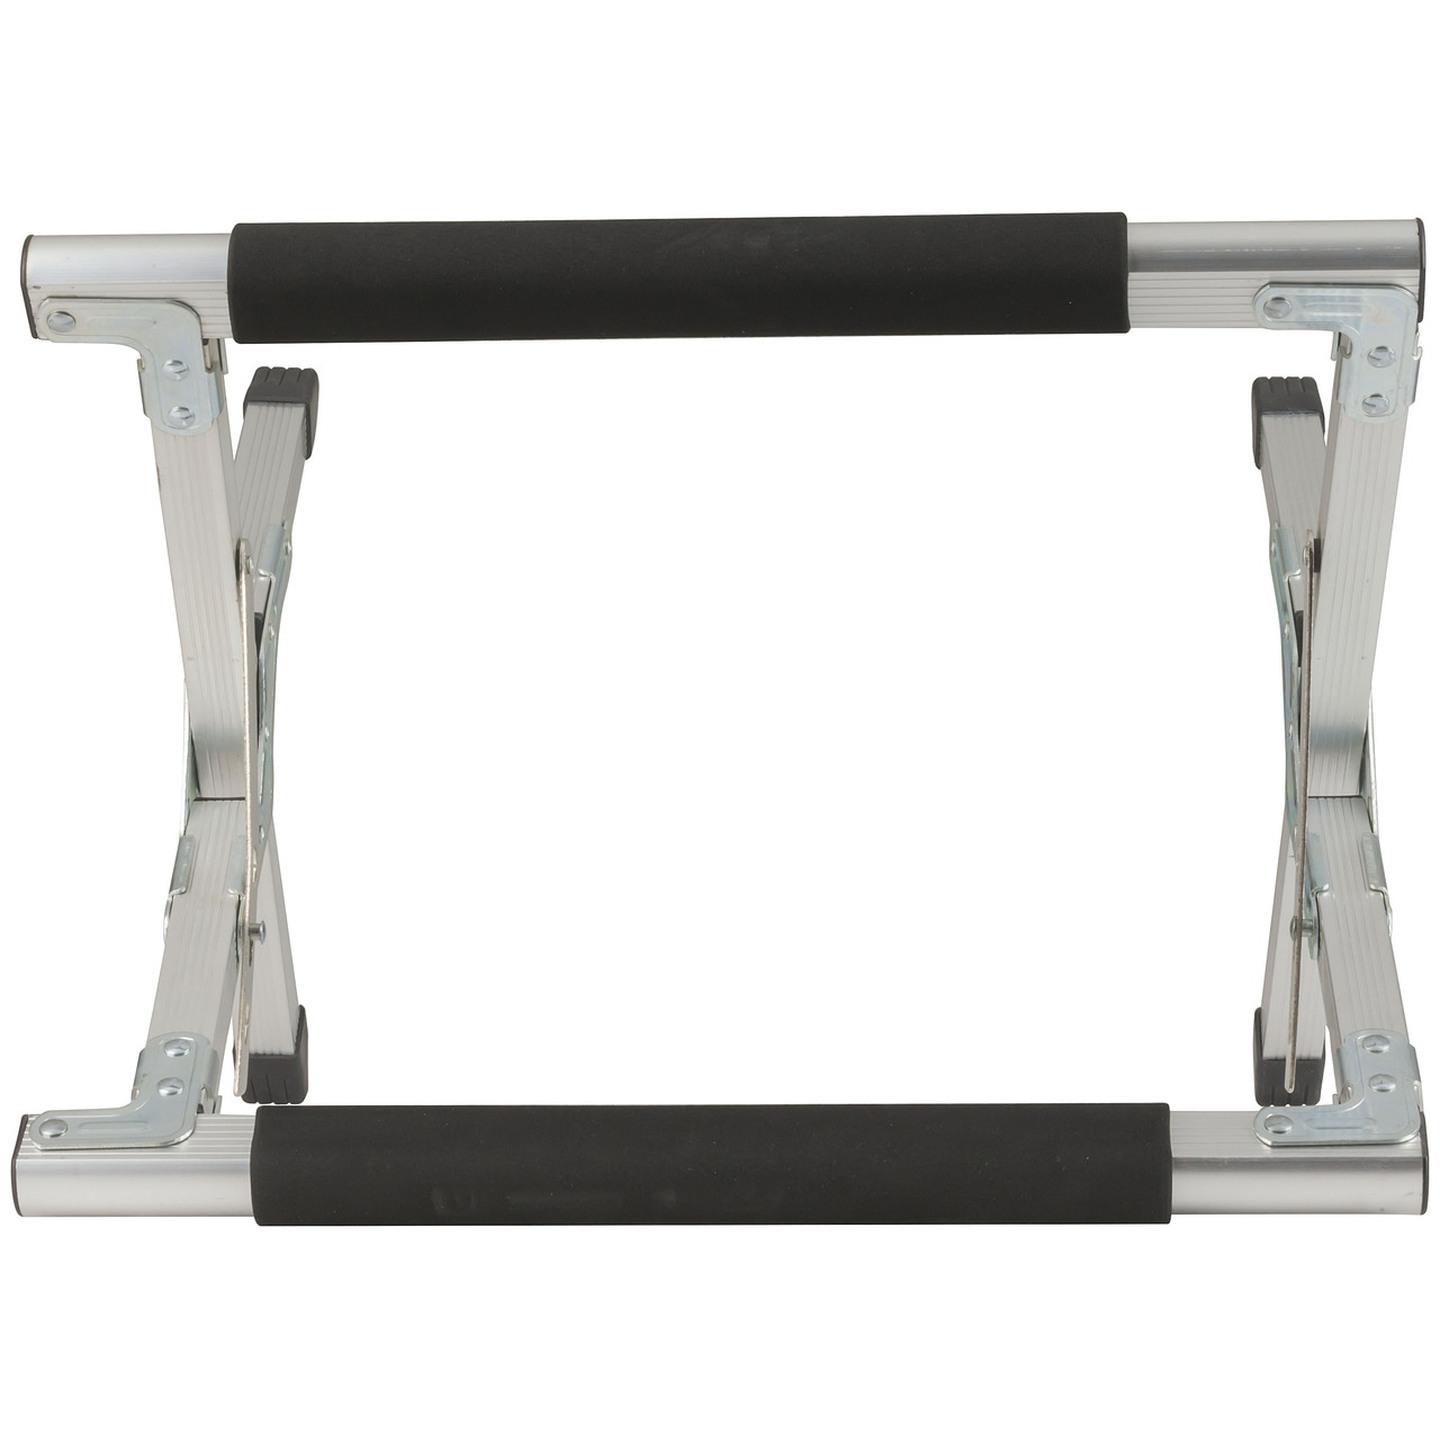 Folding Aluminium Fridge Stand - 150kg Rated